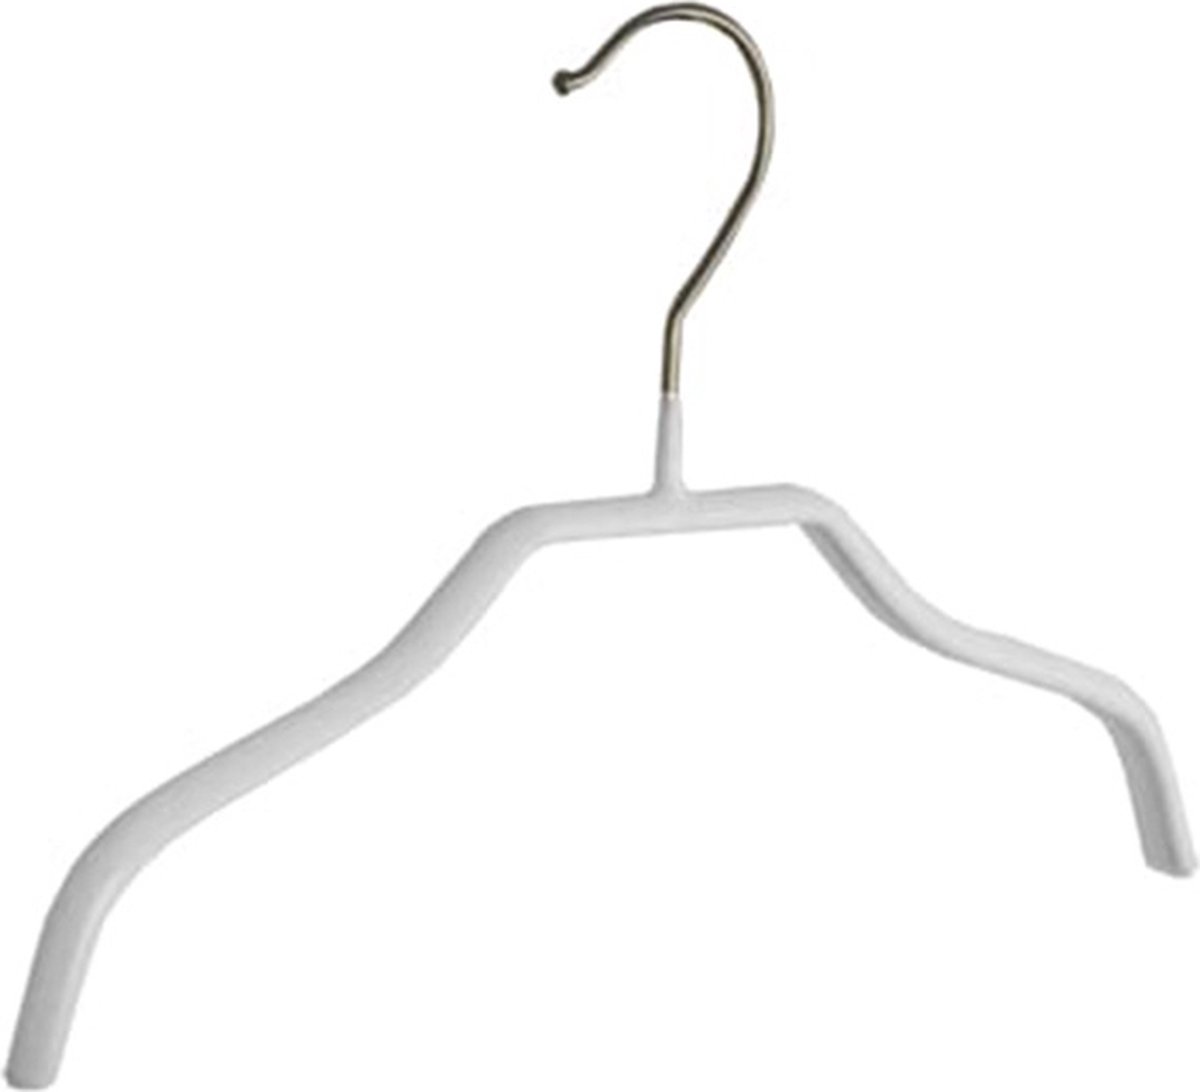 De Kledinghanger Gigant - 10 x Blousehanger / shirthanger / babyhanger / kinderhanger metaal met witte anti-slip coating, 28 cm